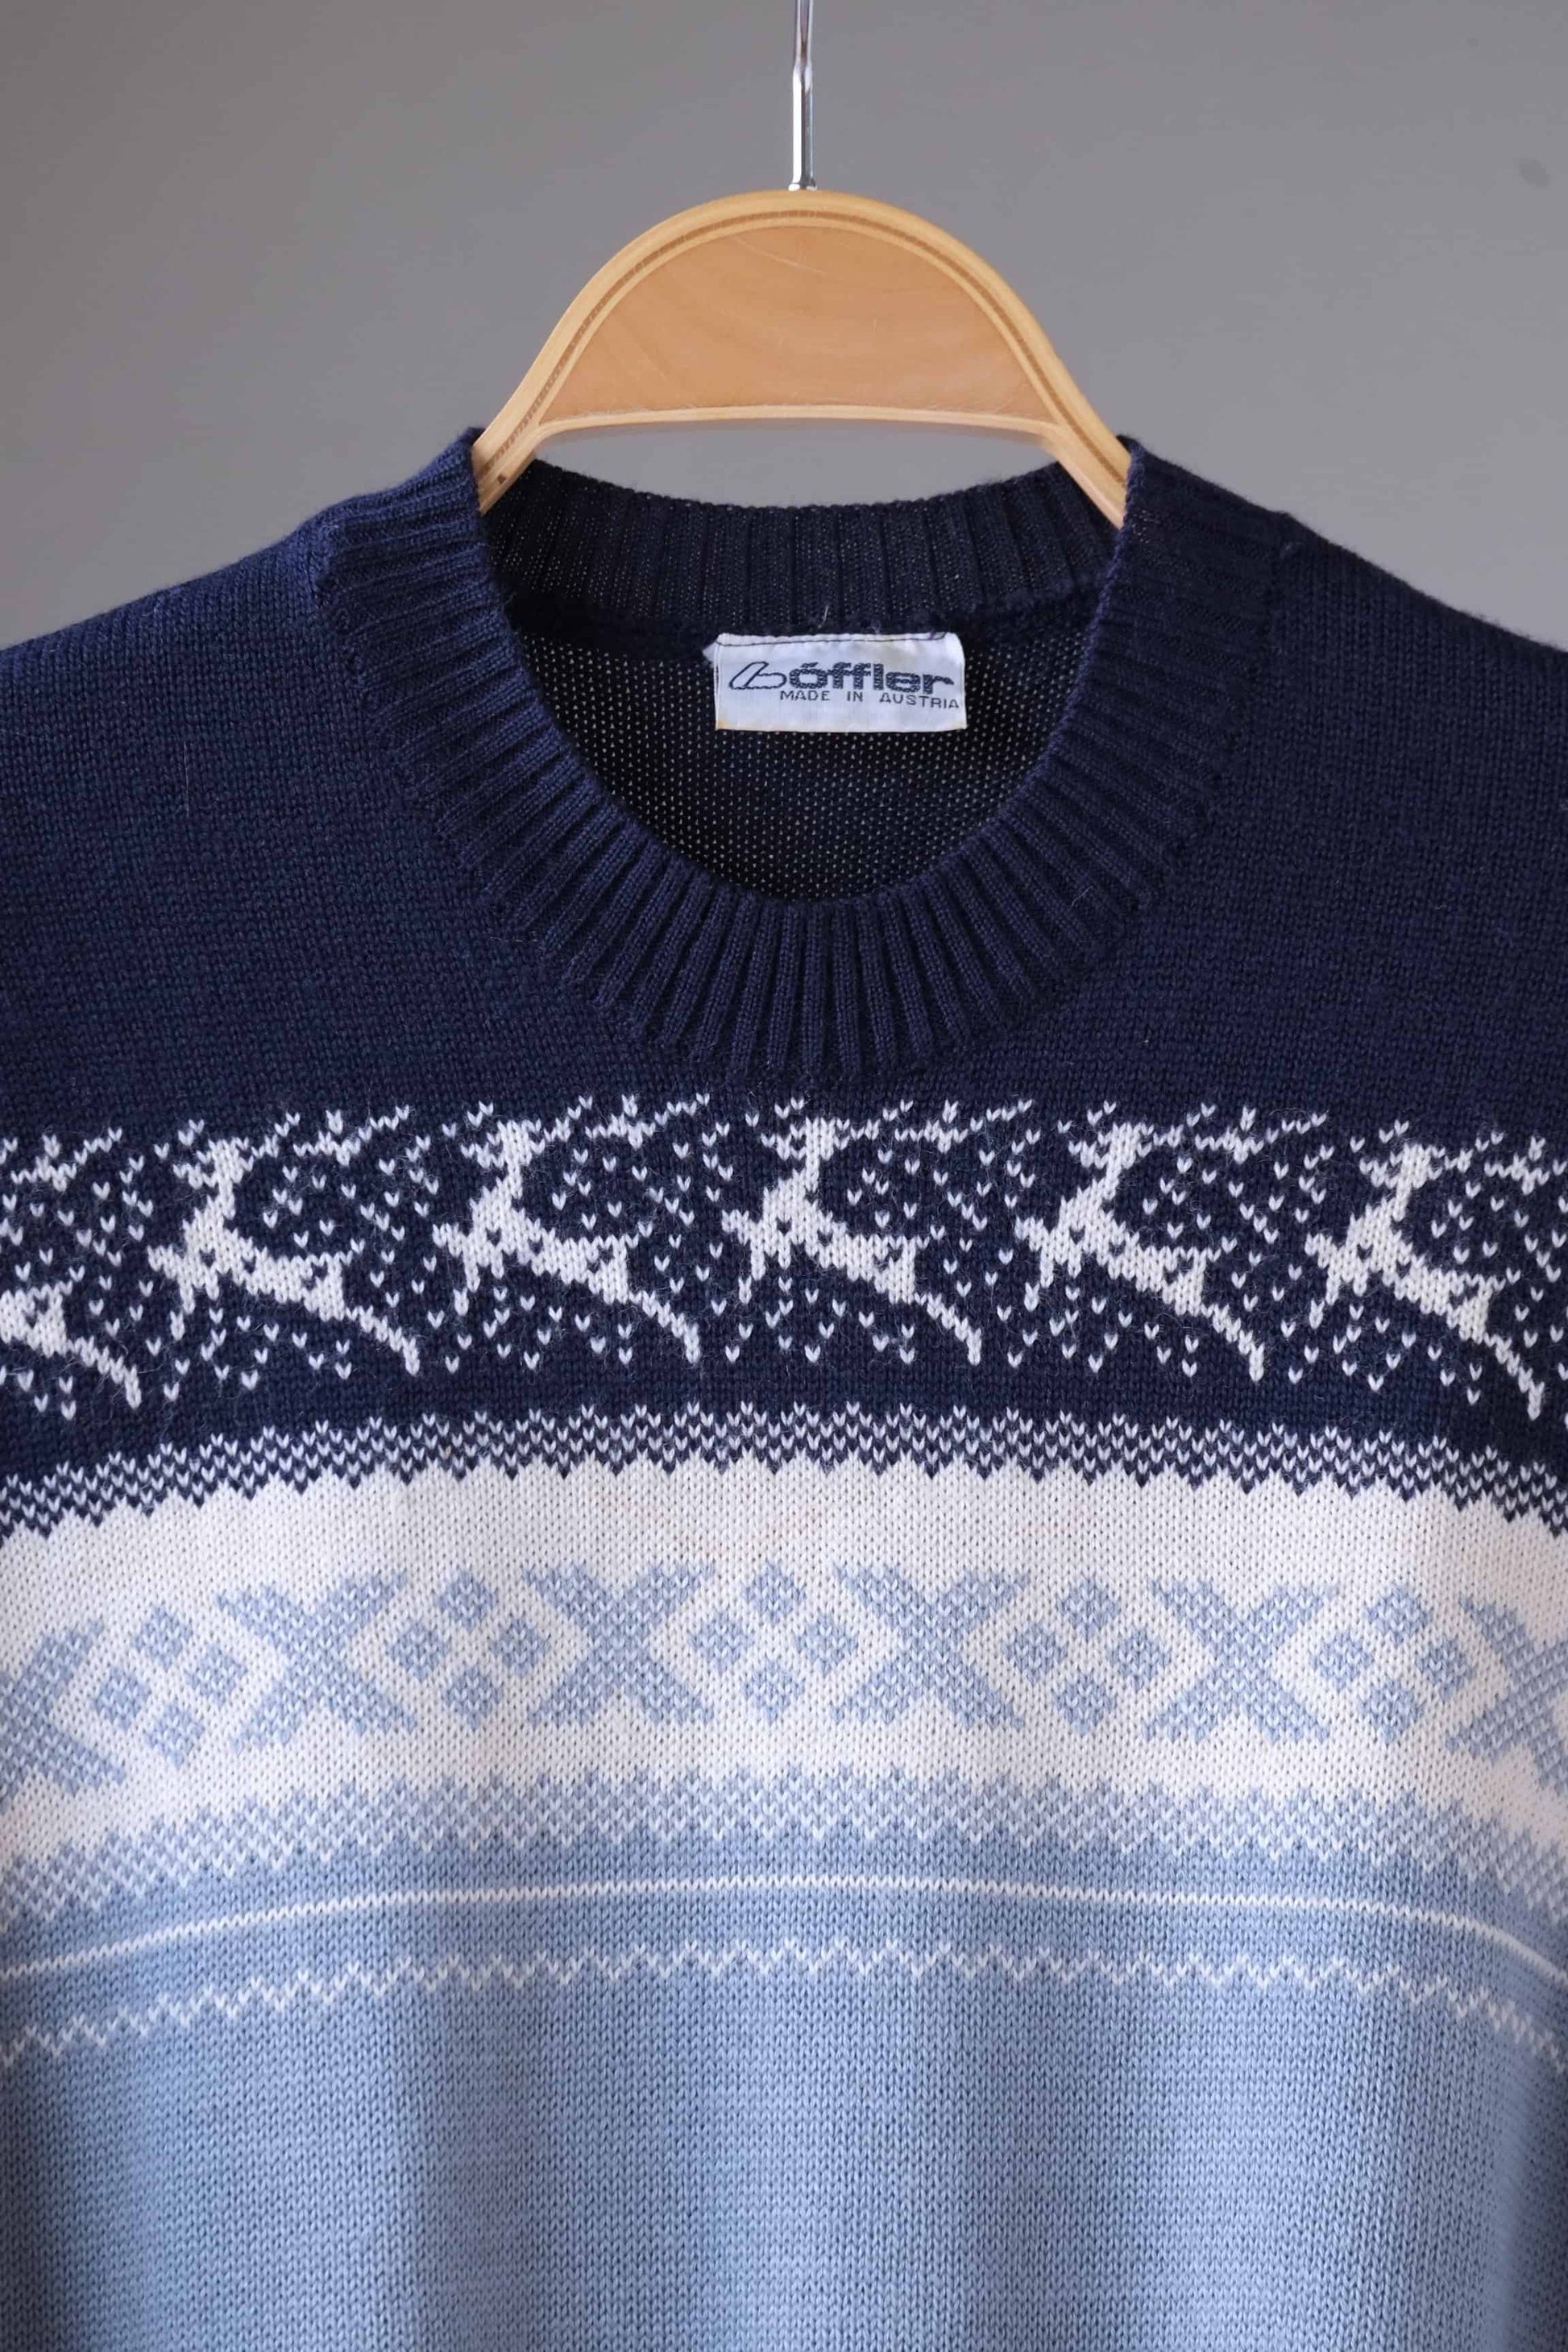 Vintage 80's Jacquard Sweater close up